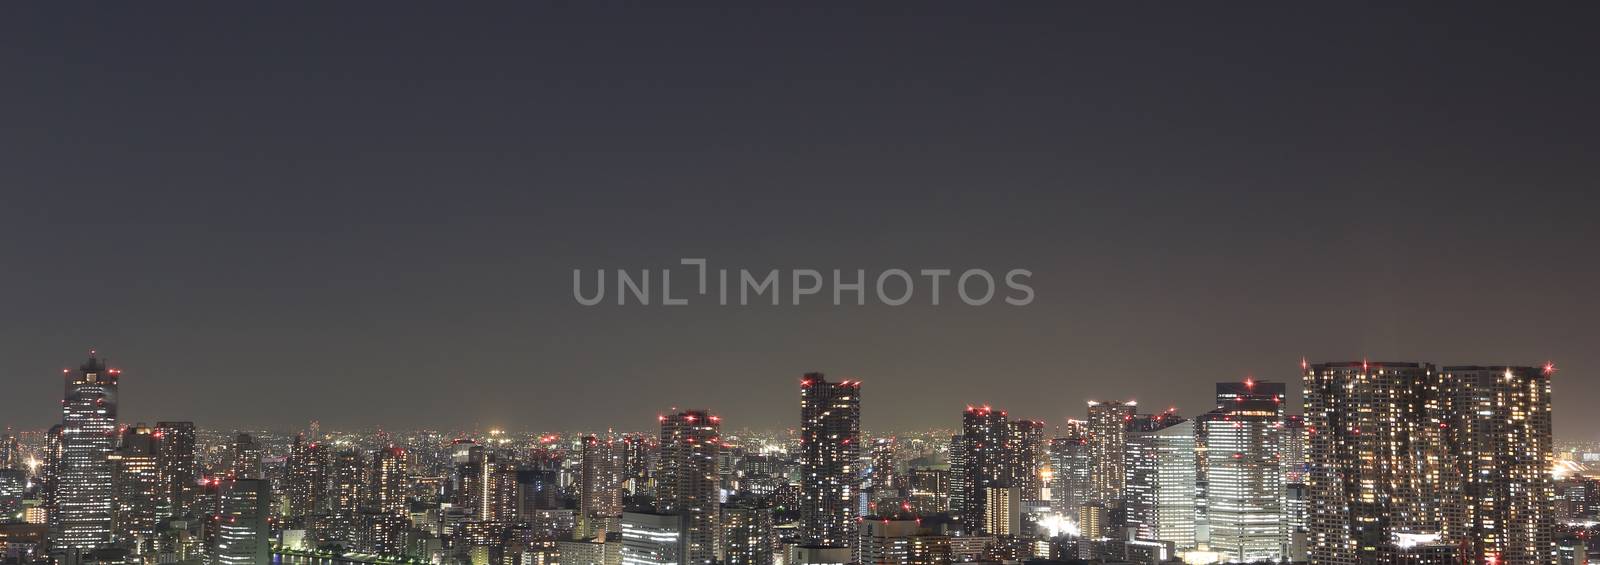 Tokyo at night panorama by geargodz